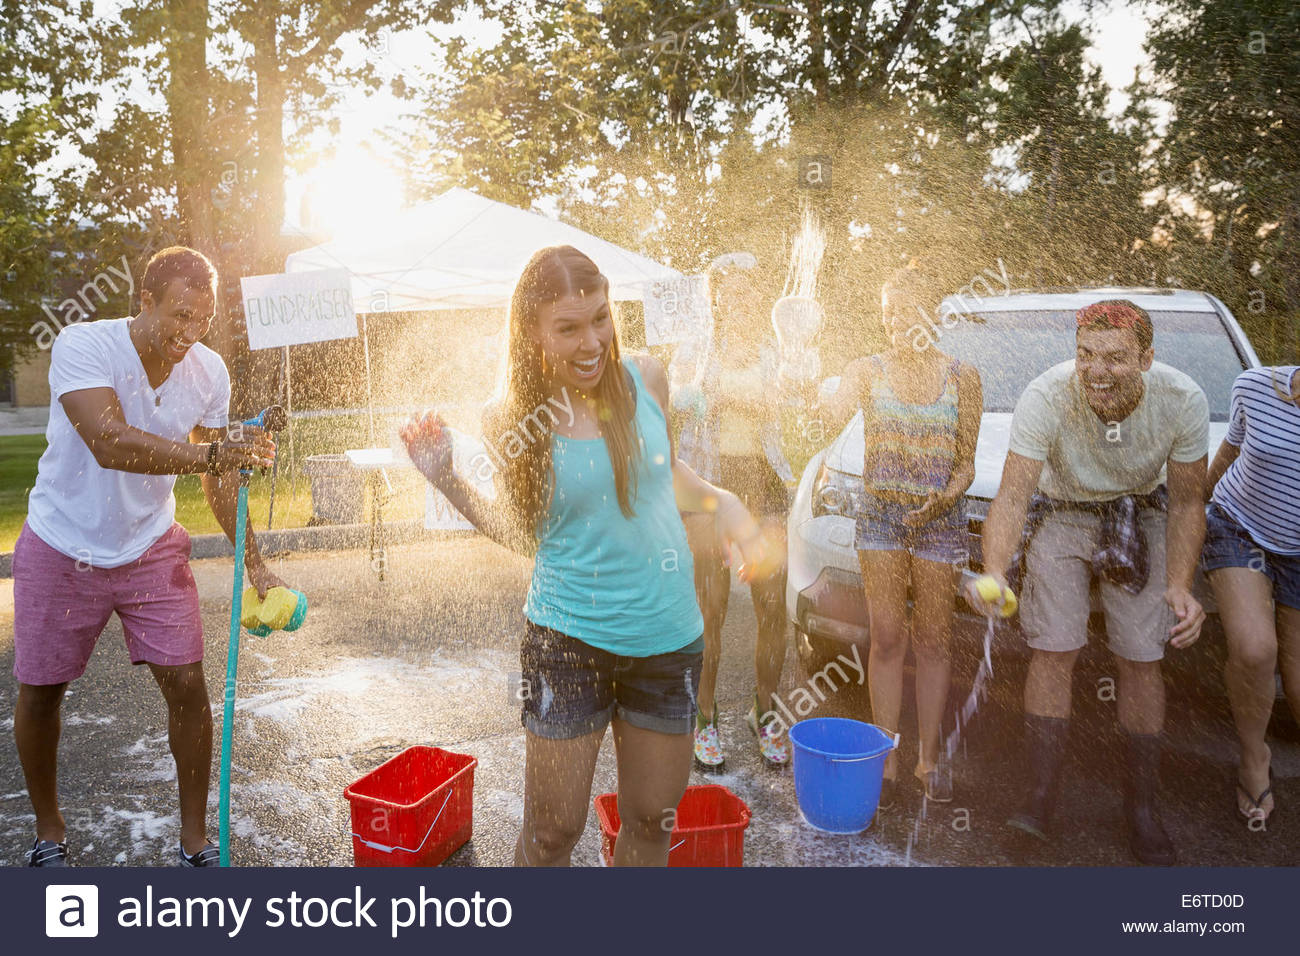 Man spraying woman with hose at car wash Stock Photo